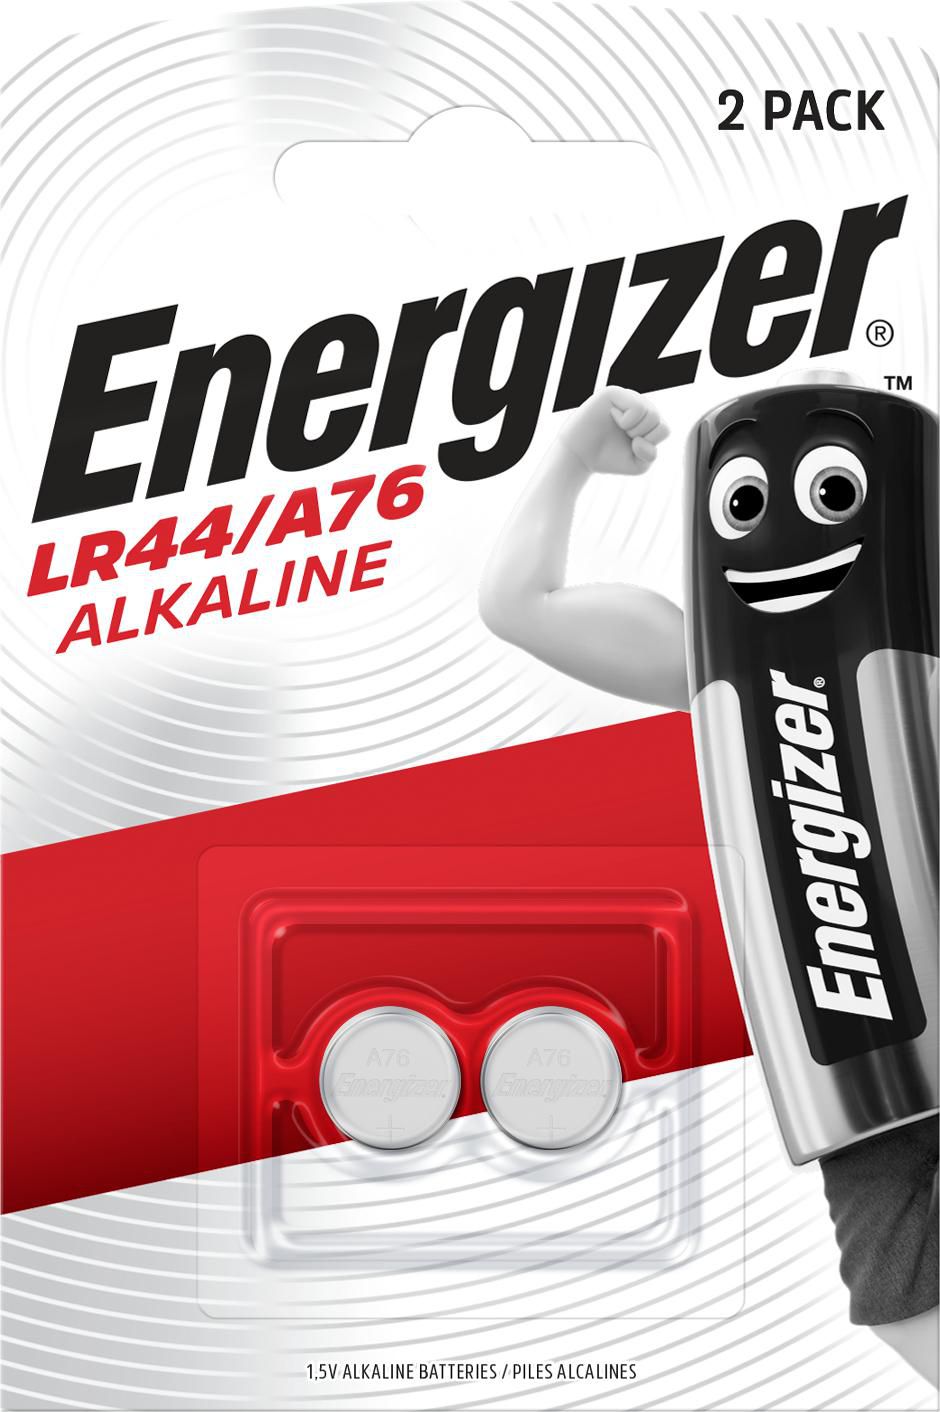 Energizer 7638900083071 Battery LR44A76 Alkaline 2-pa 